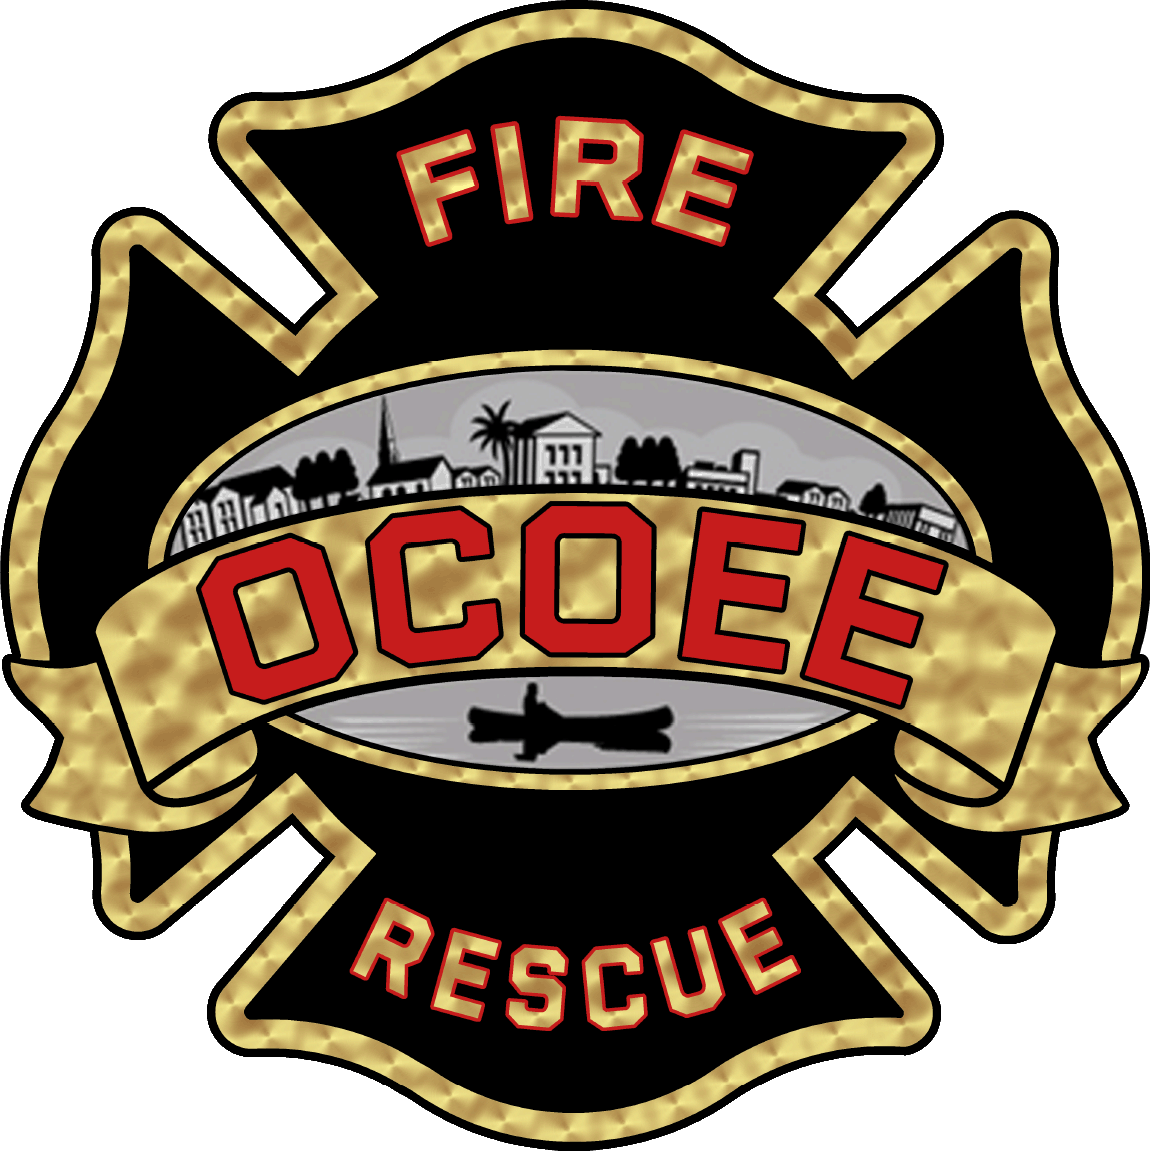 Ocoee Fire Department Fire Fighters Equipment And Department - Ocoee Fire Department (1150x1151)